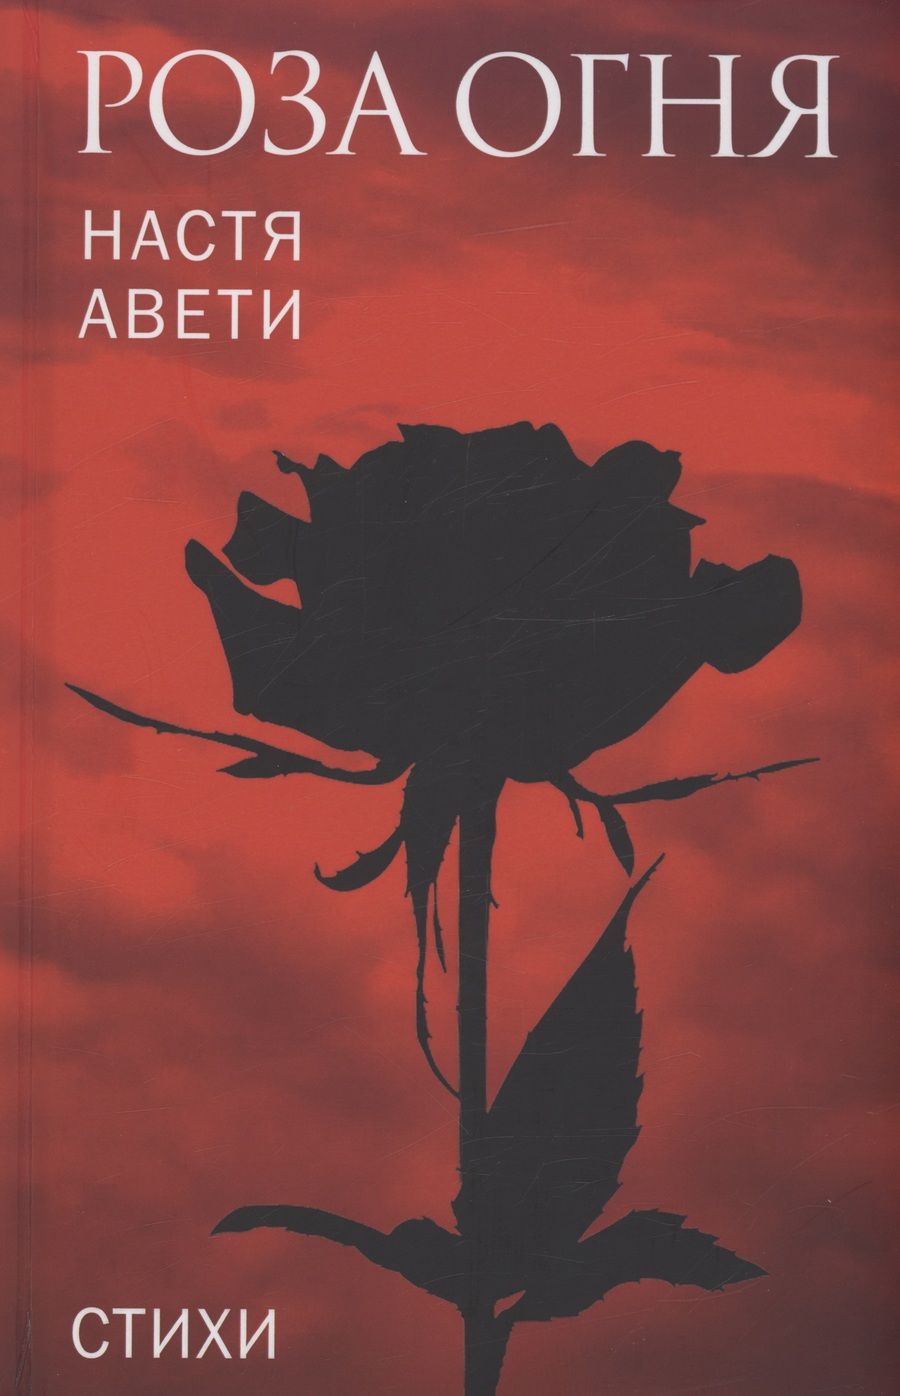 Обложка книги "Авети: Роза огня. Стихи"